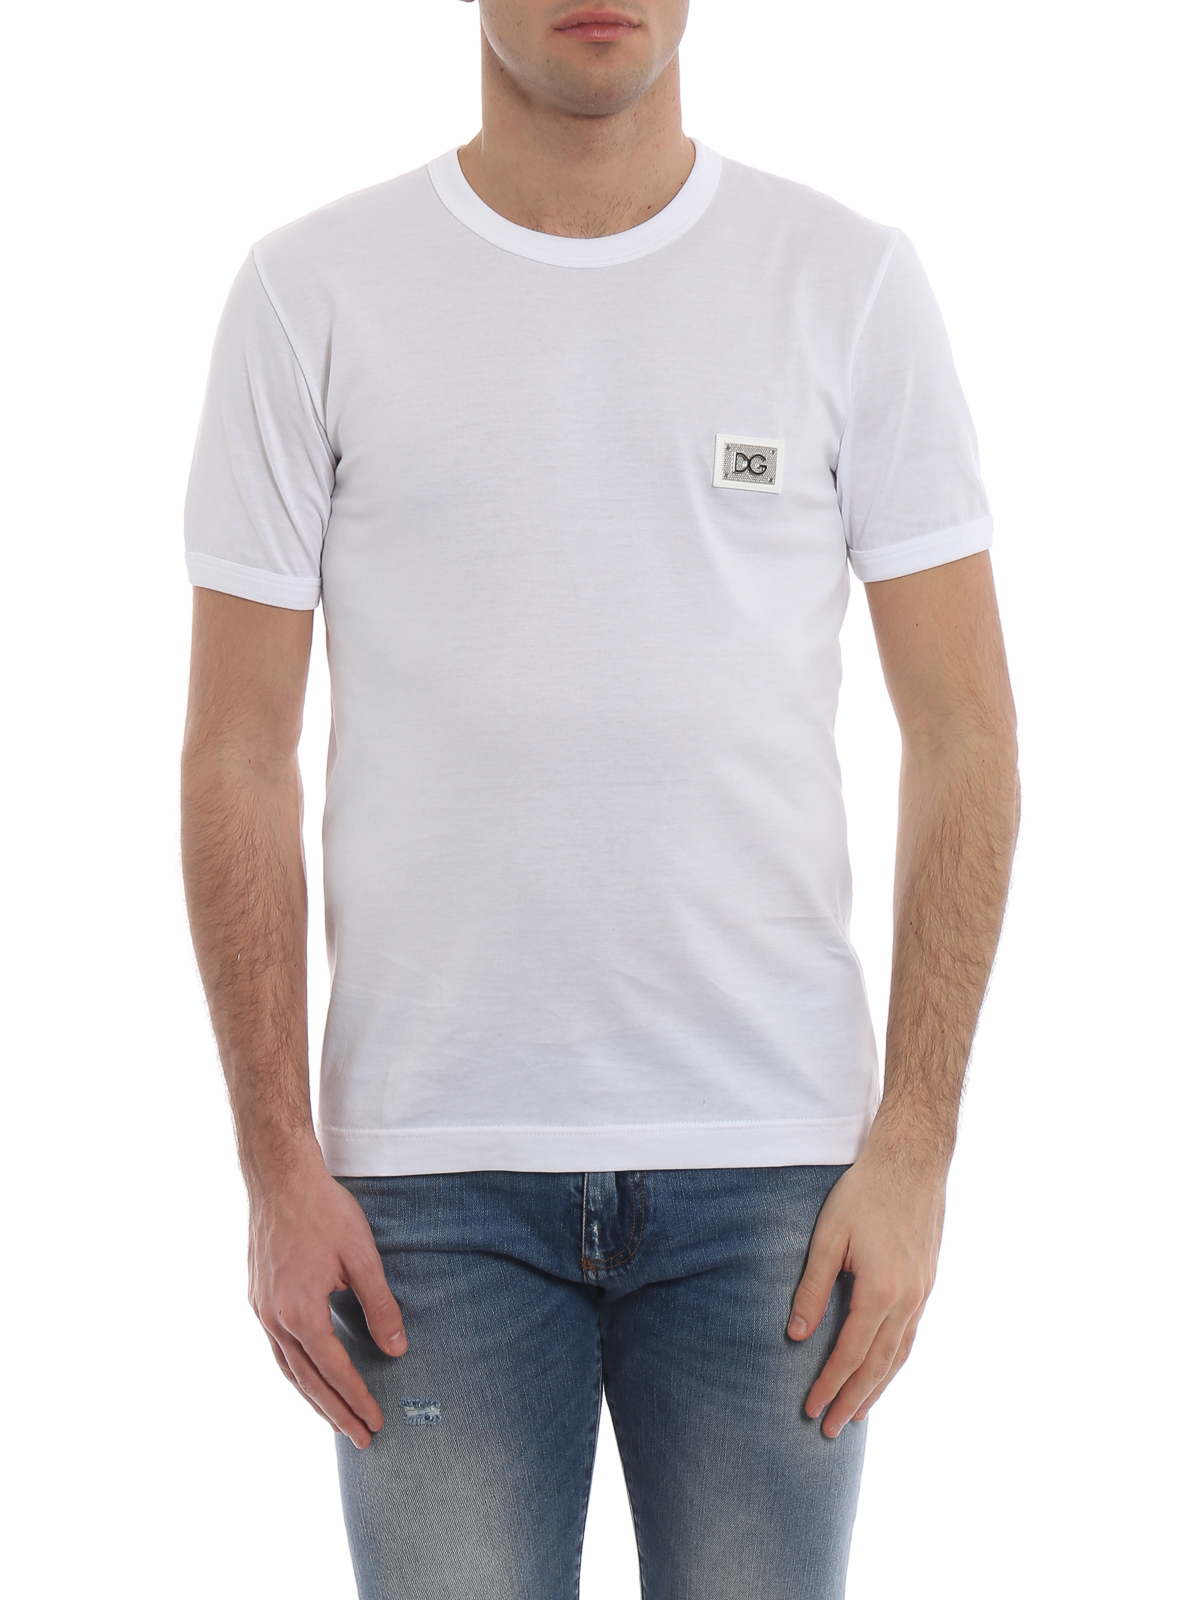 taktik Permanent handikap T-shirts Dolce & Gabbana - Logo patch short sleeve cotton Tee -  G8IV0TG7RMHW0800